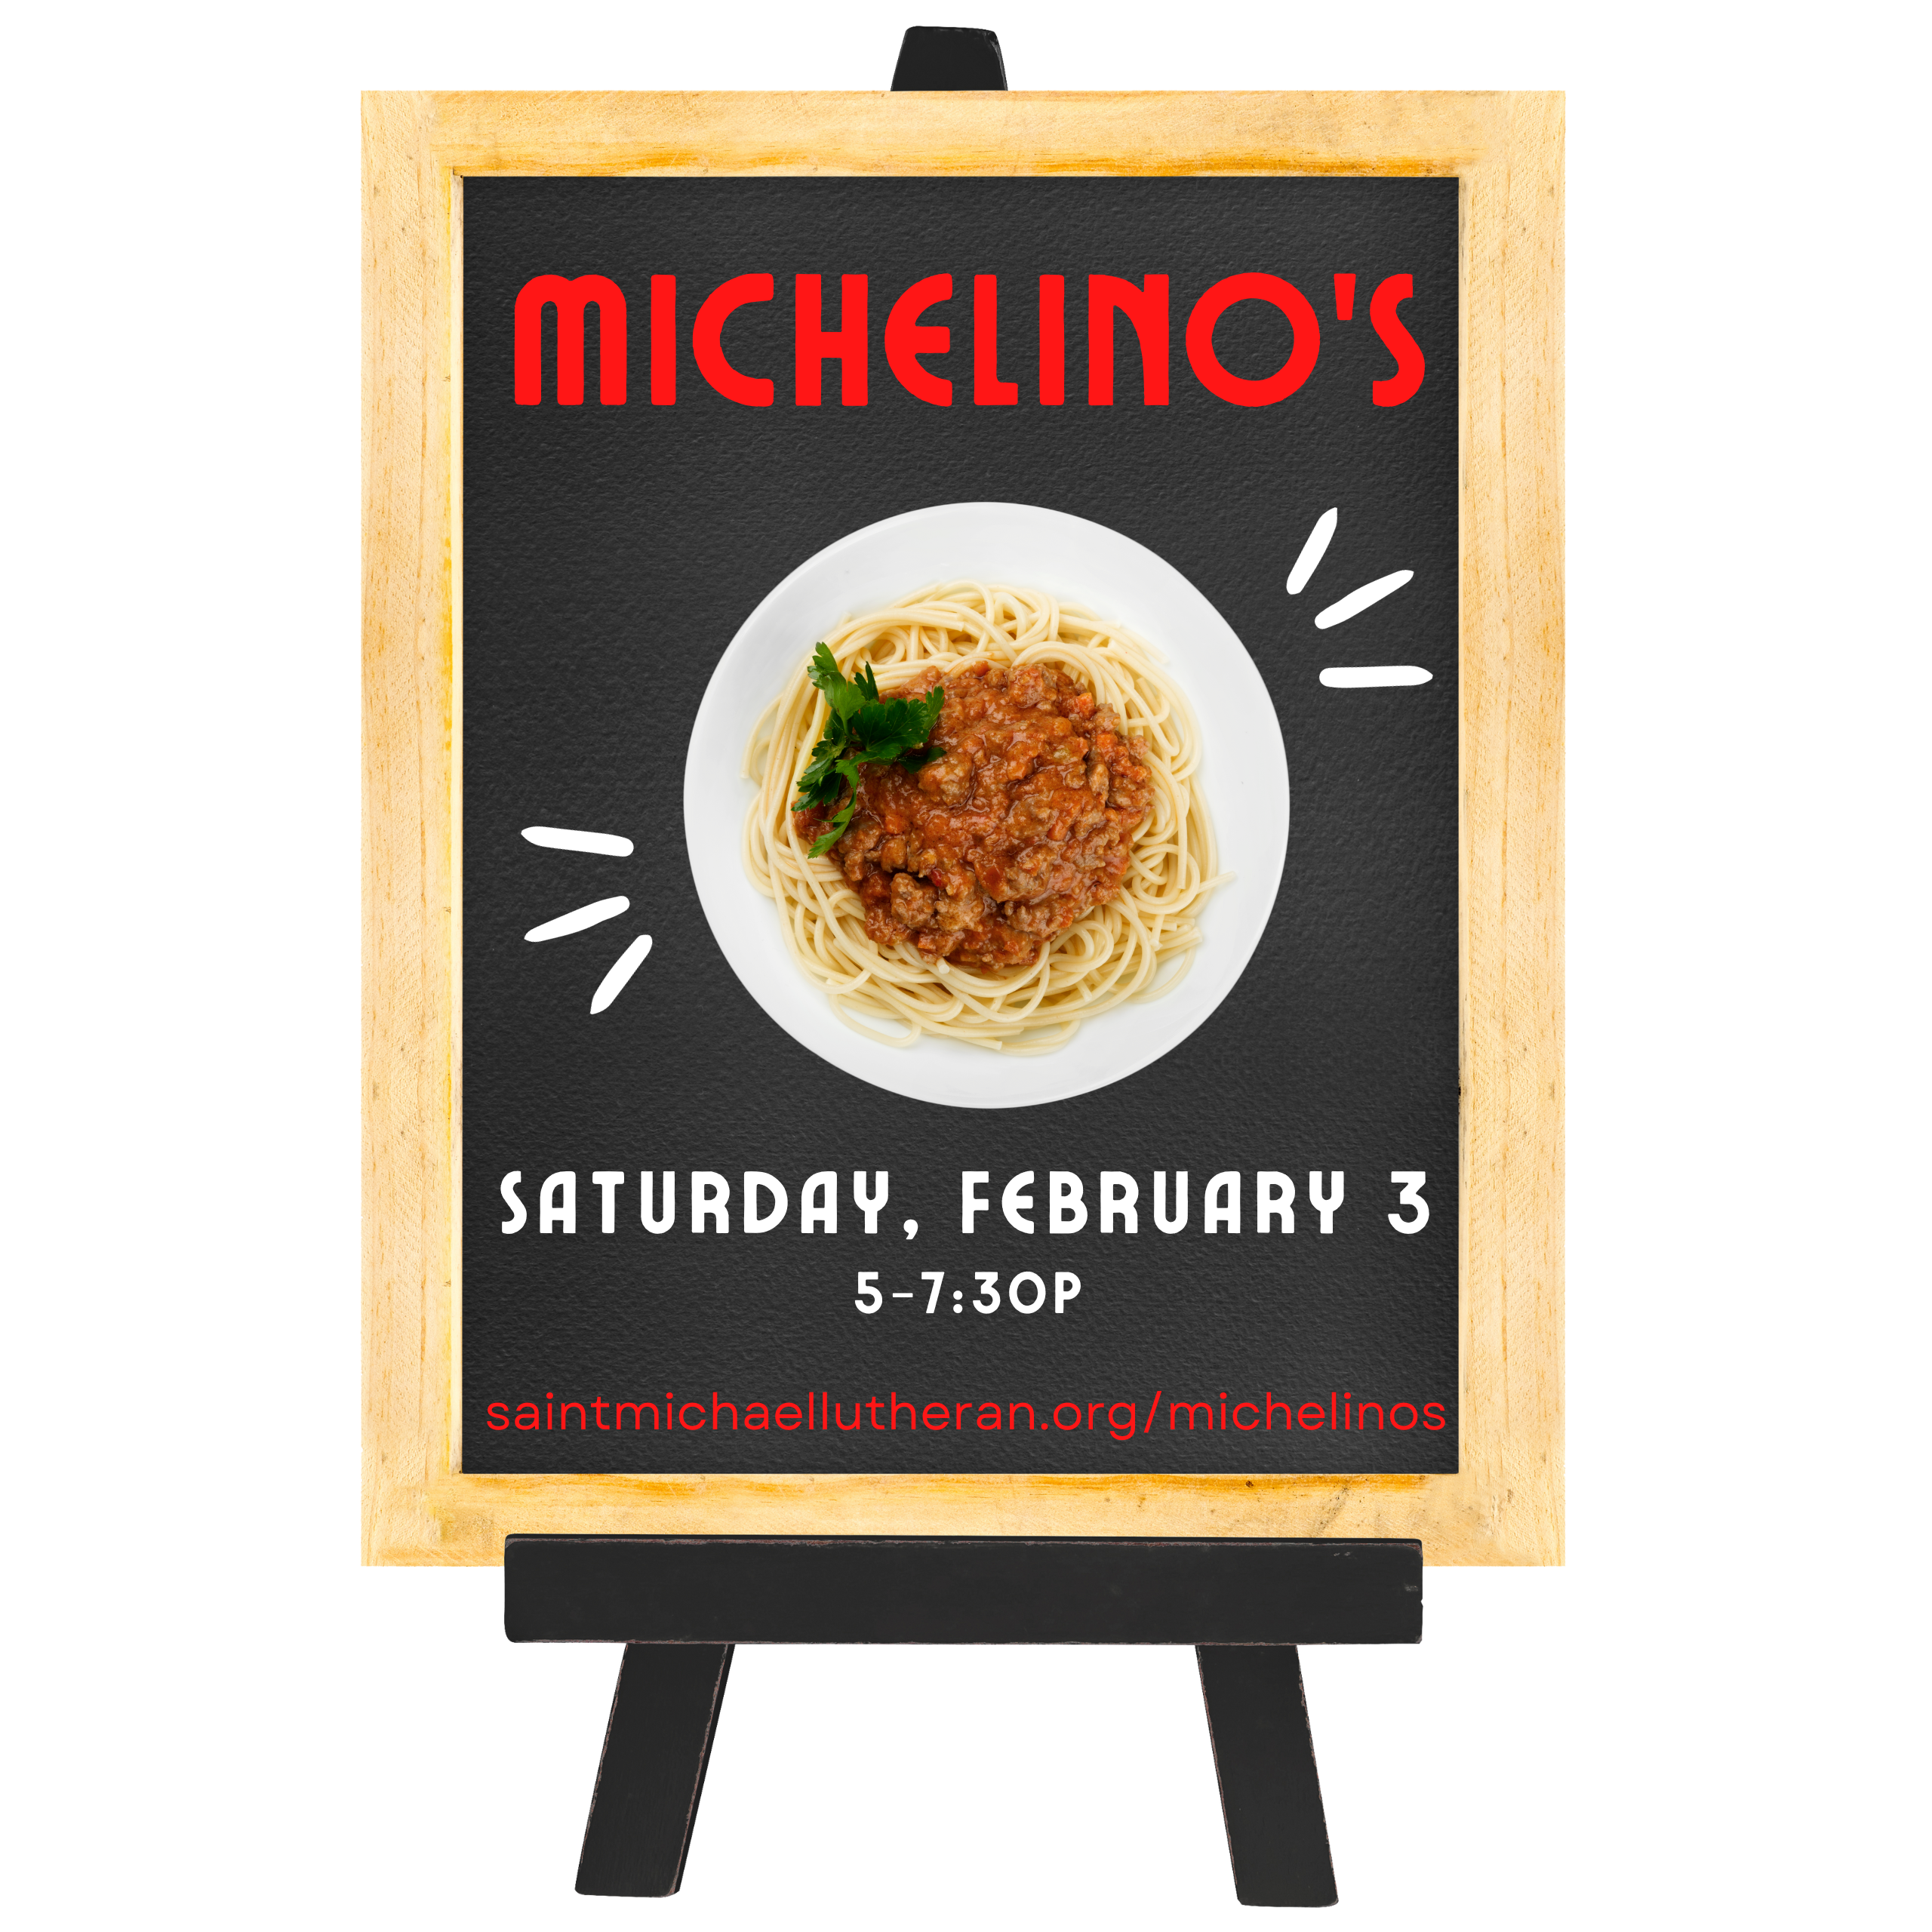 menu board with michelino's information on it